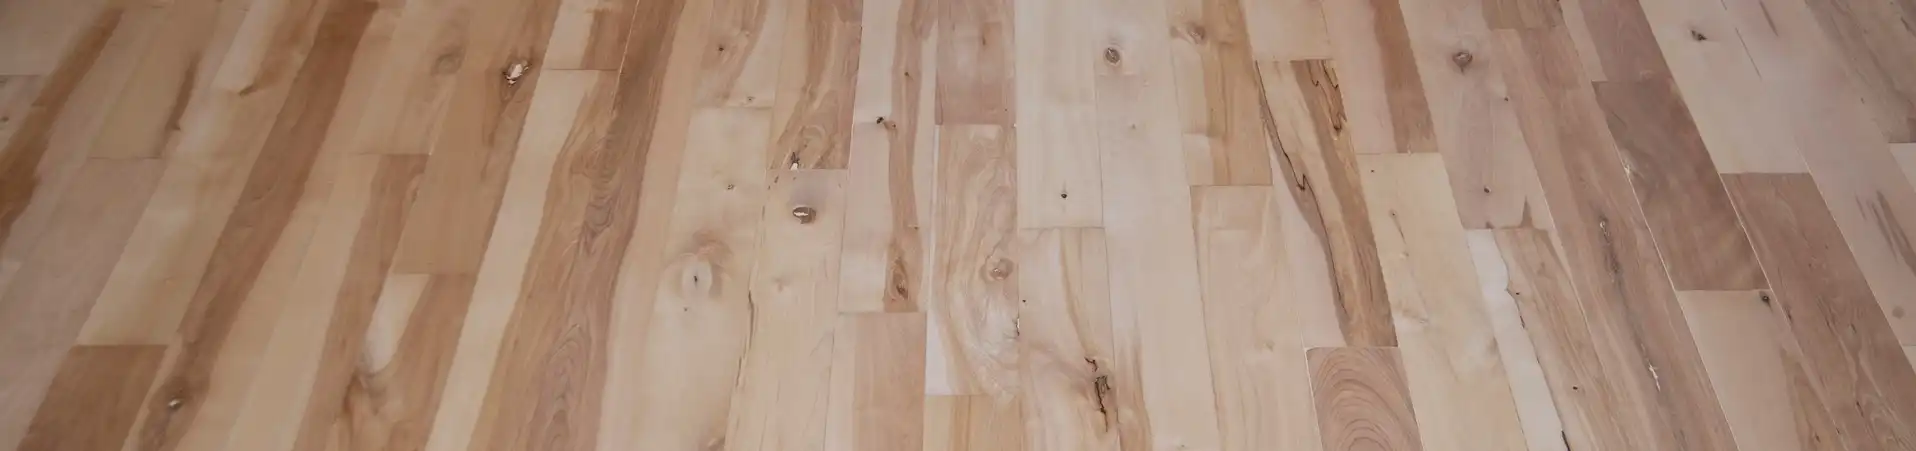 Photo of unfinished wood floor